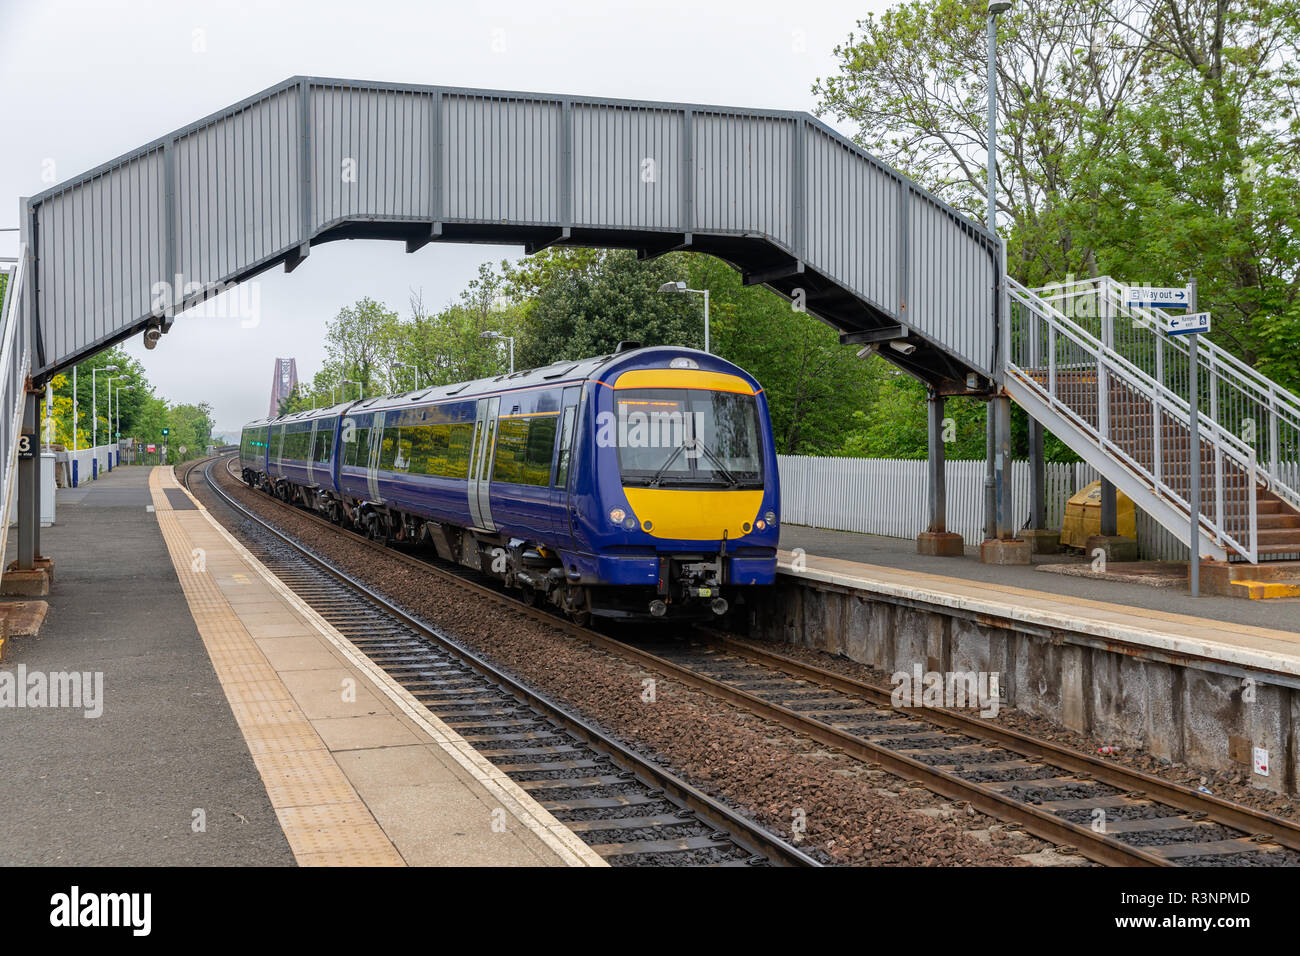 Dalmeny railway station near Bridge over Firth of Forth, Scotland Stock Photo